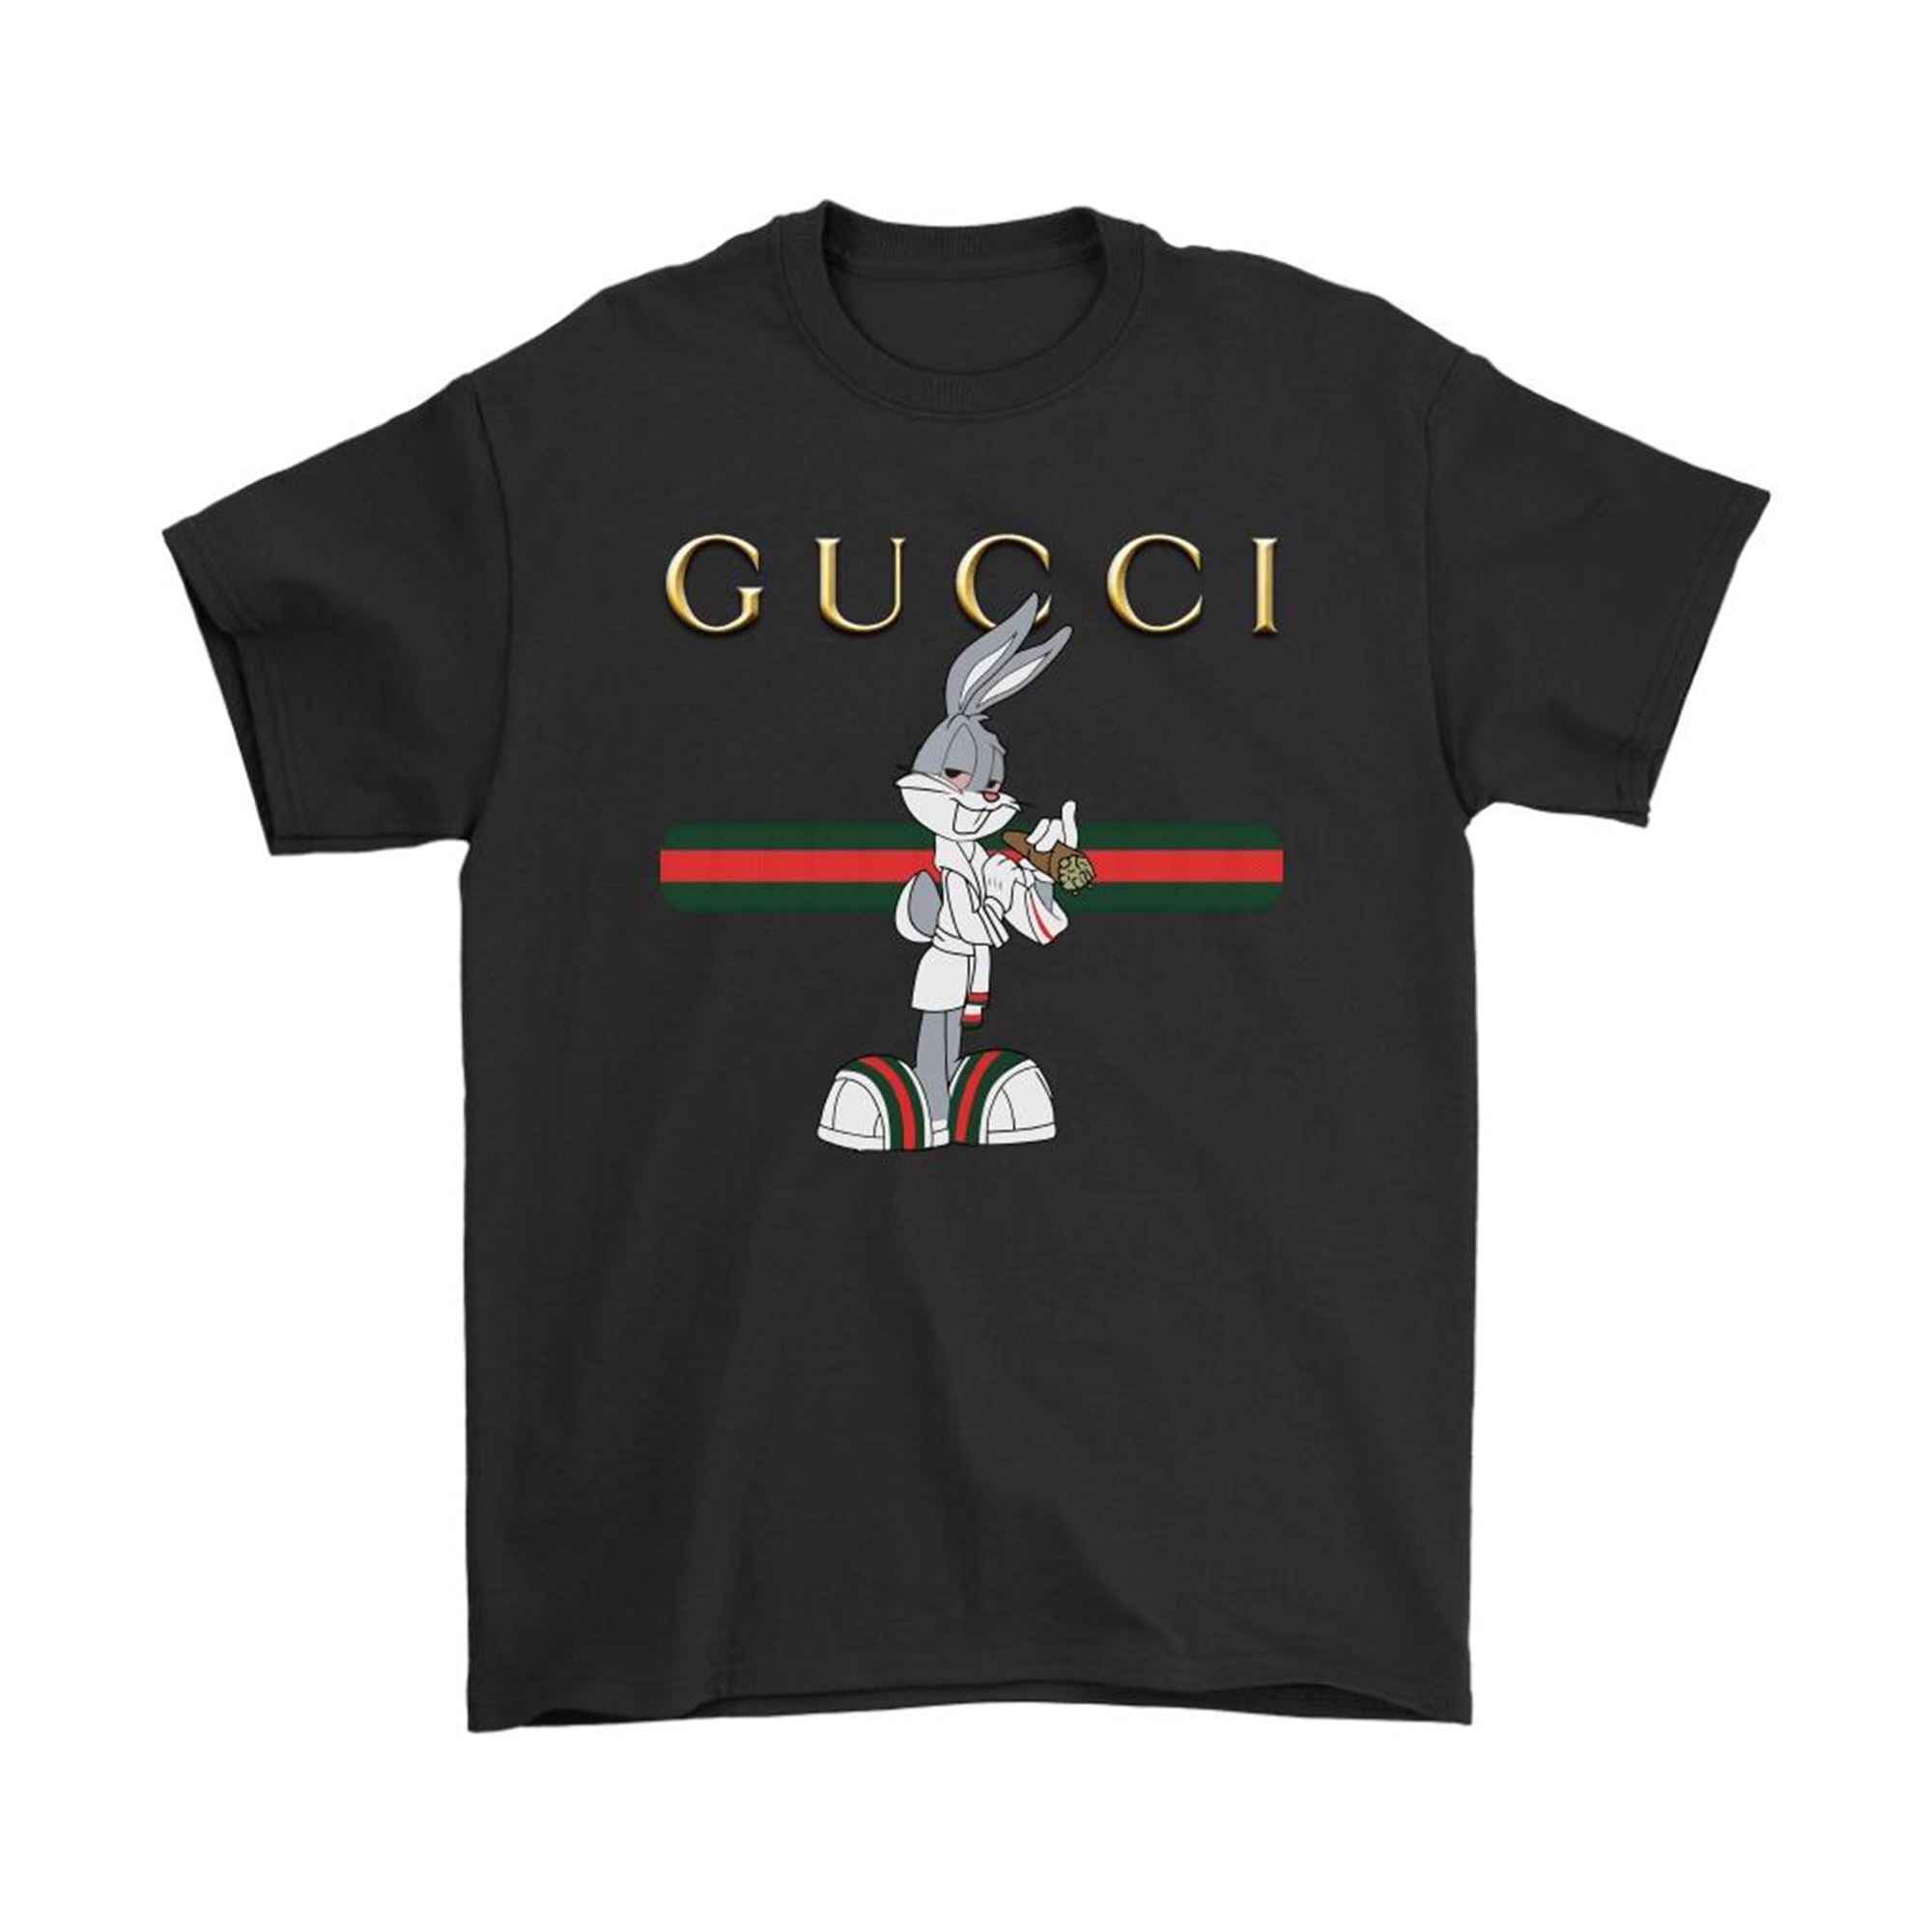 Gucci Bugs Bunny Play It Cool Shirts Tshirt